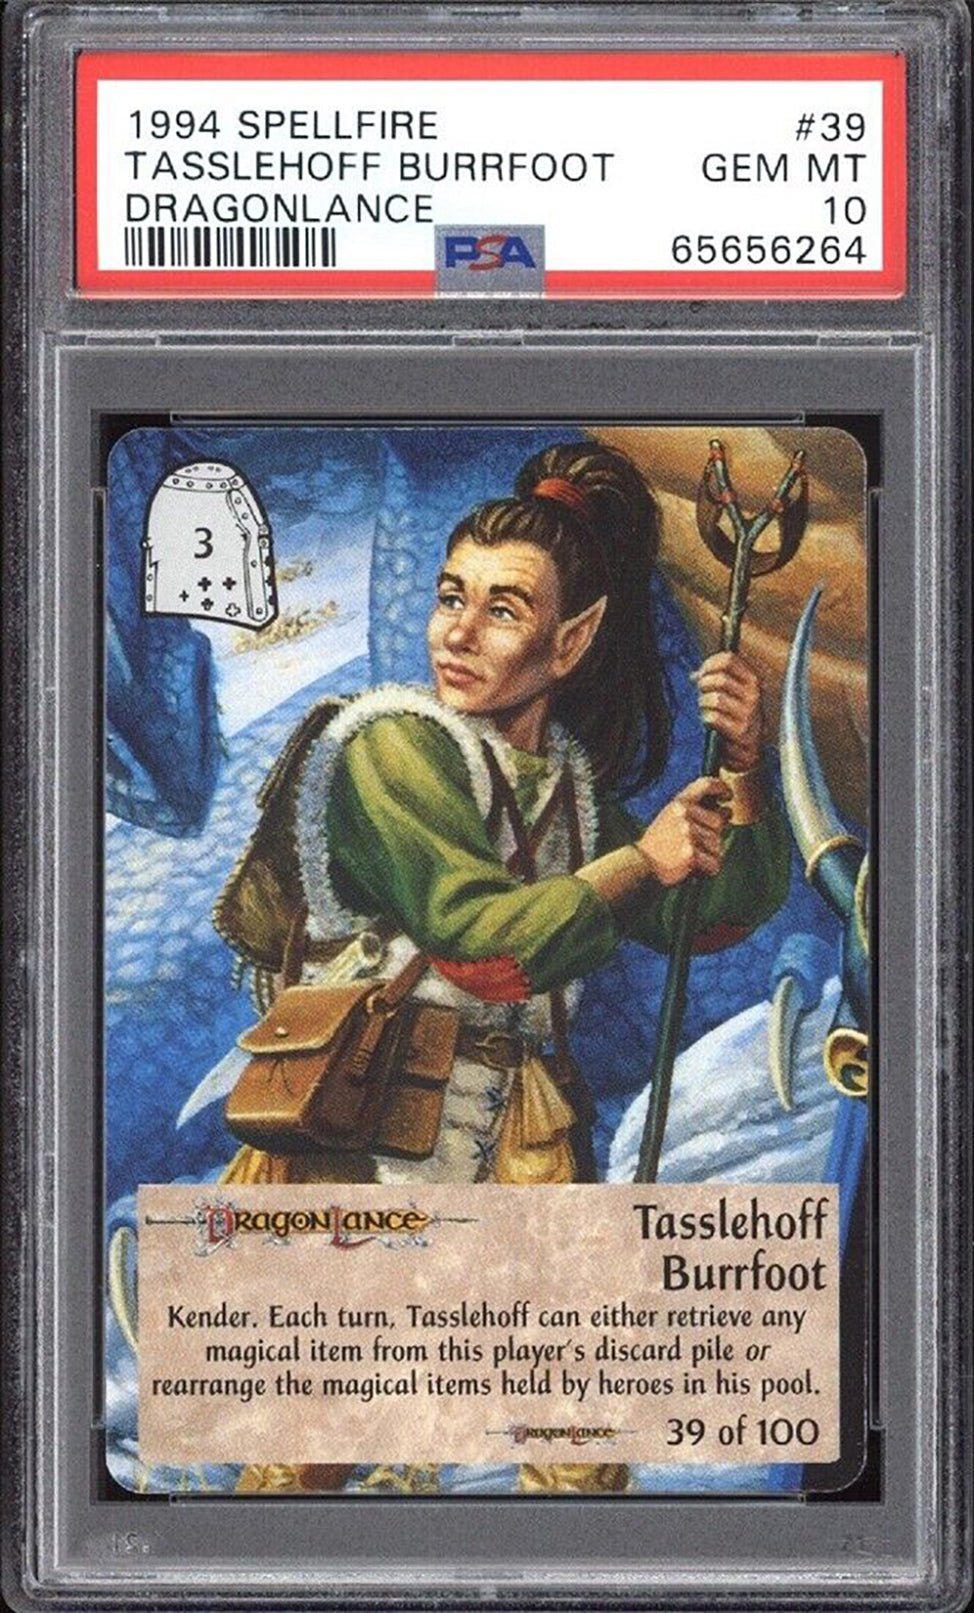 TASSLEHOFF BURRFOOT PSA 10 1994 Spellfire Dragonlance #39 C1 Dungeons & Dragons Base Graded Cards - Hobby Gems